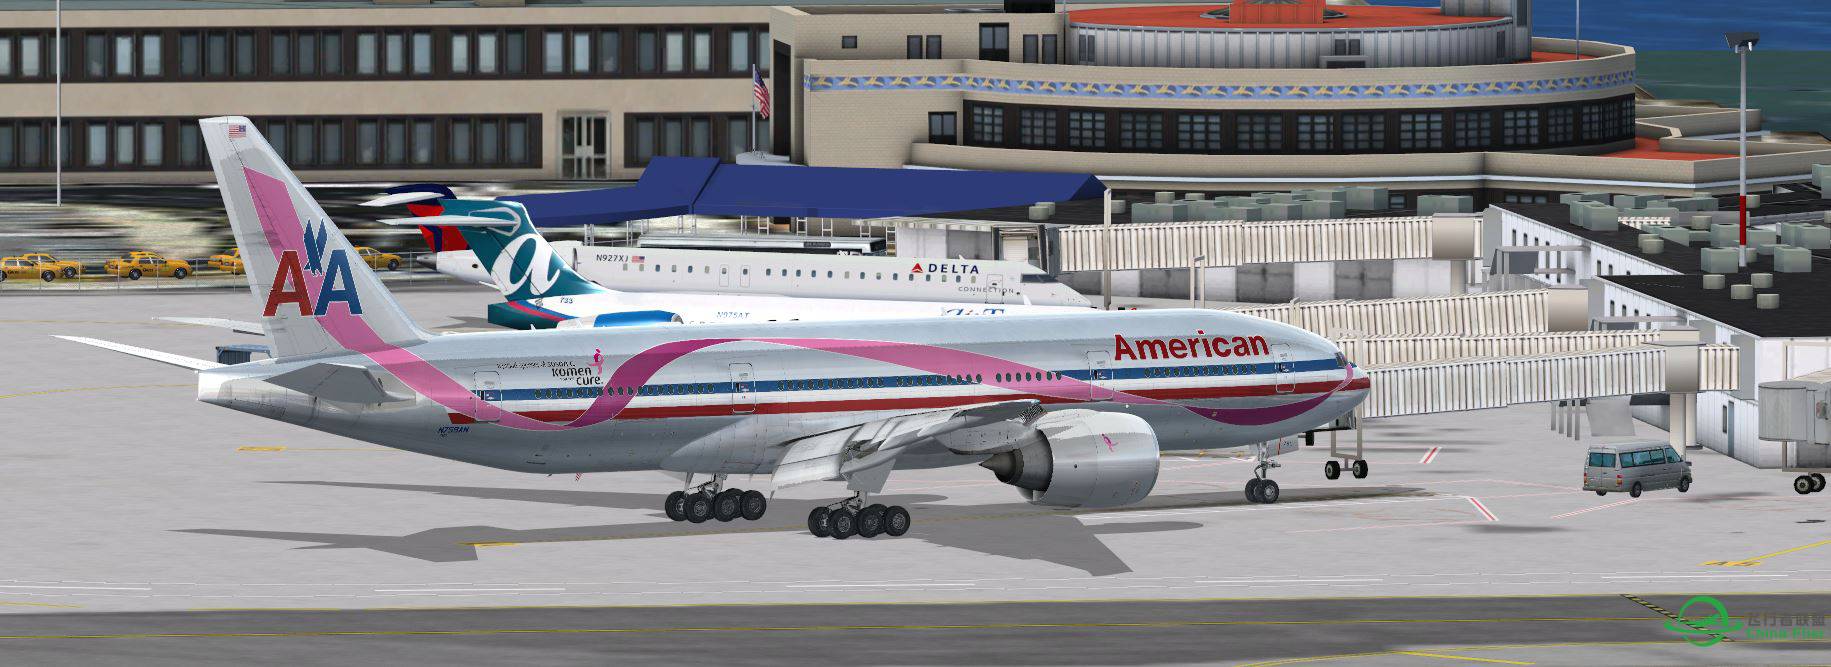 B777 American Airline-9633 